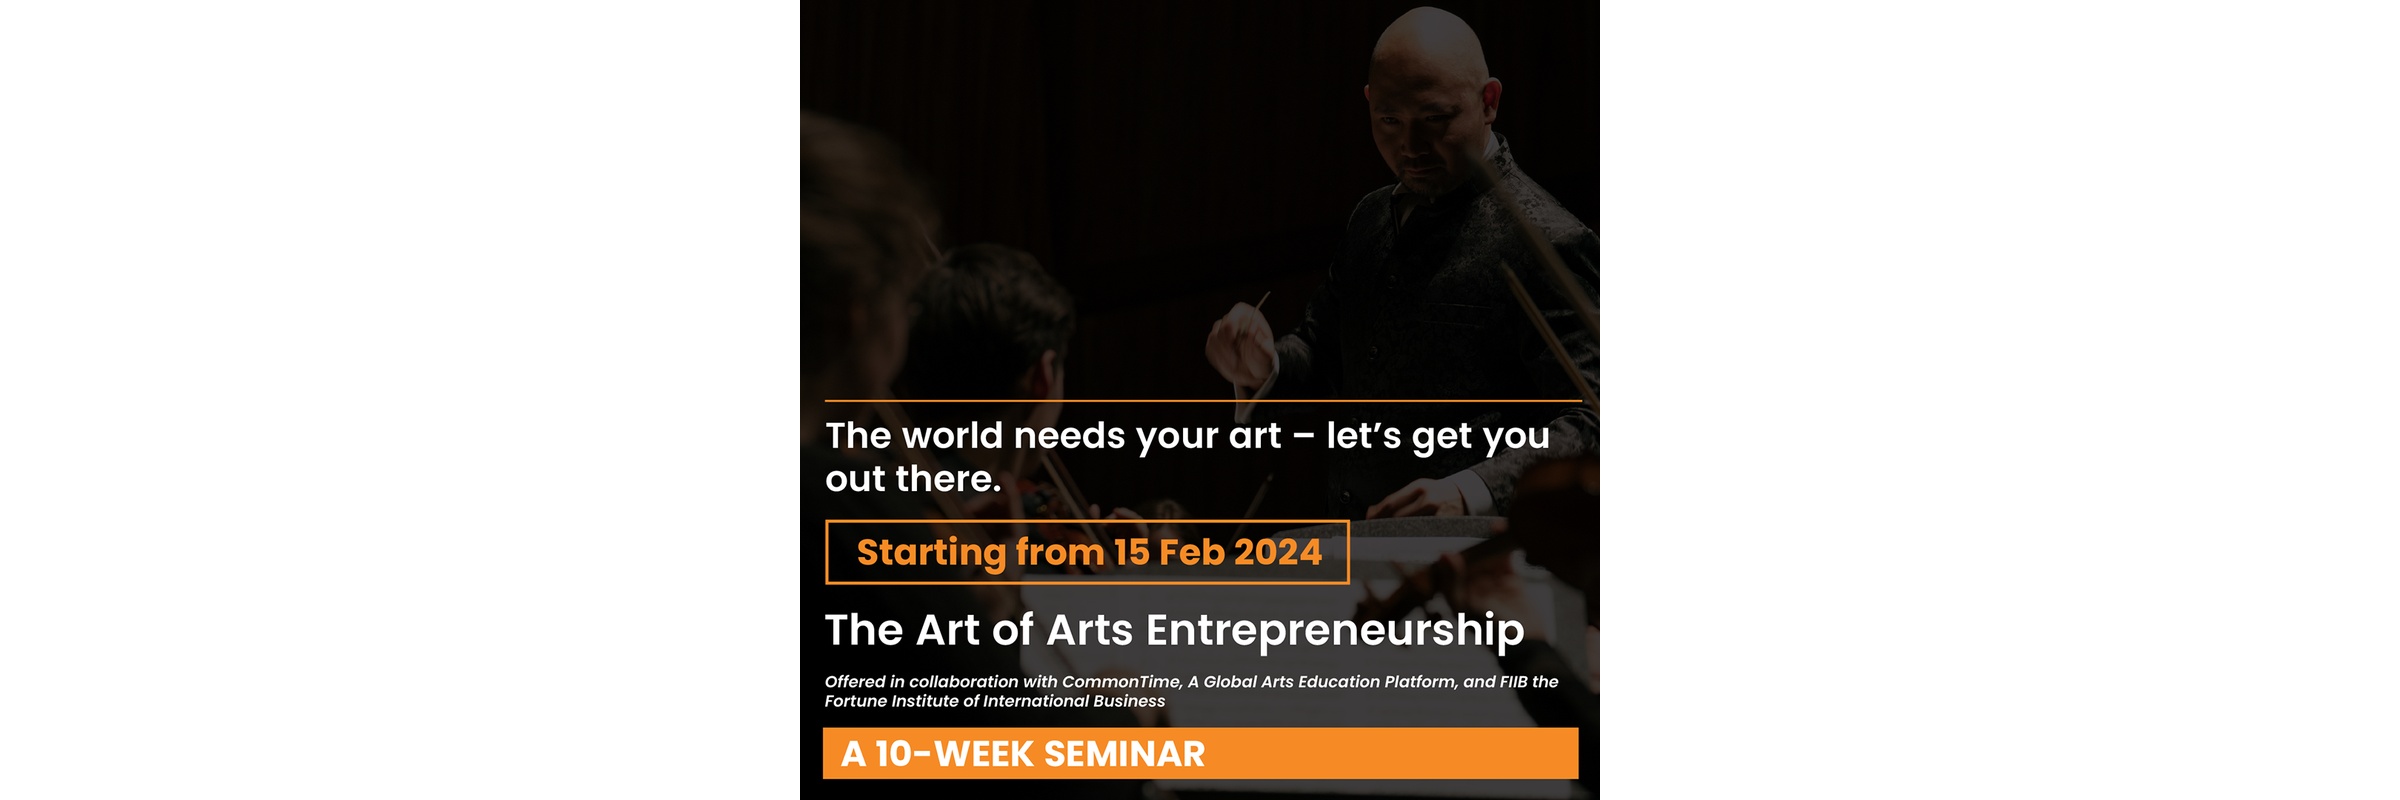 Jeffrey Levenberg - The Art of Arts Entrepreneurship Onboarding FIIB+CT